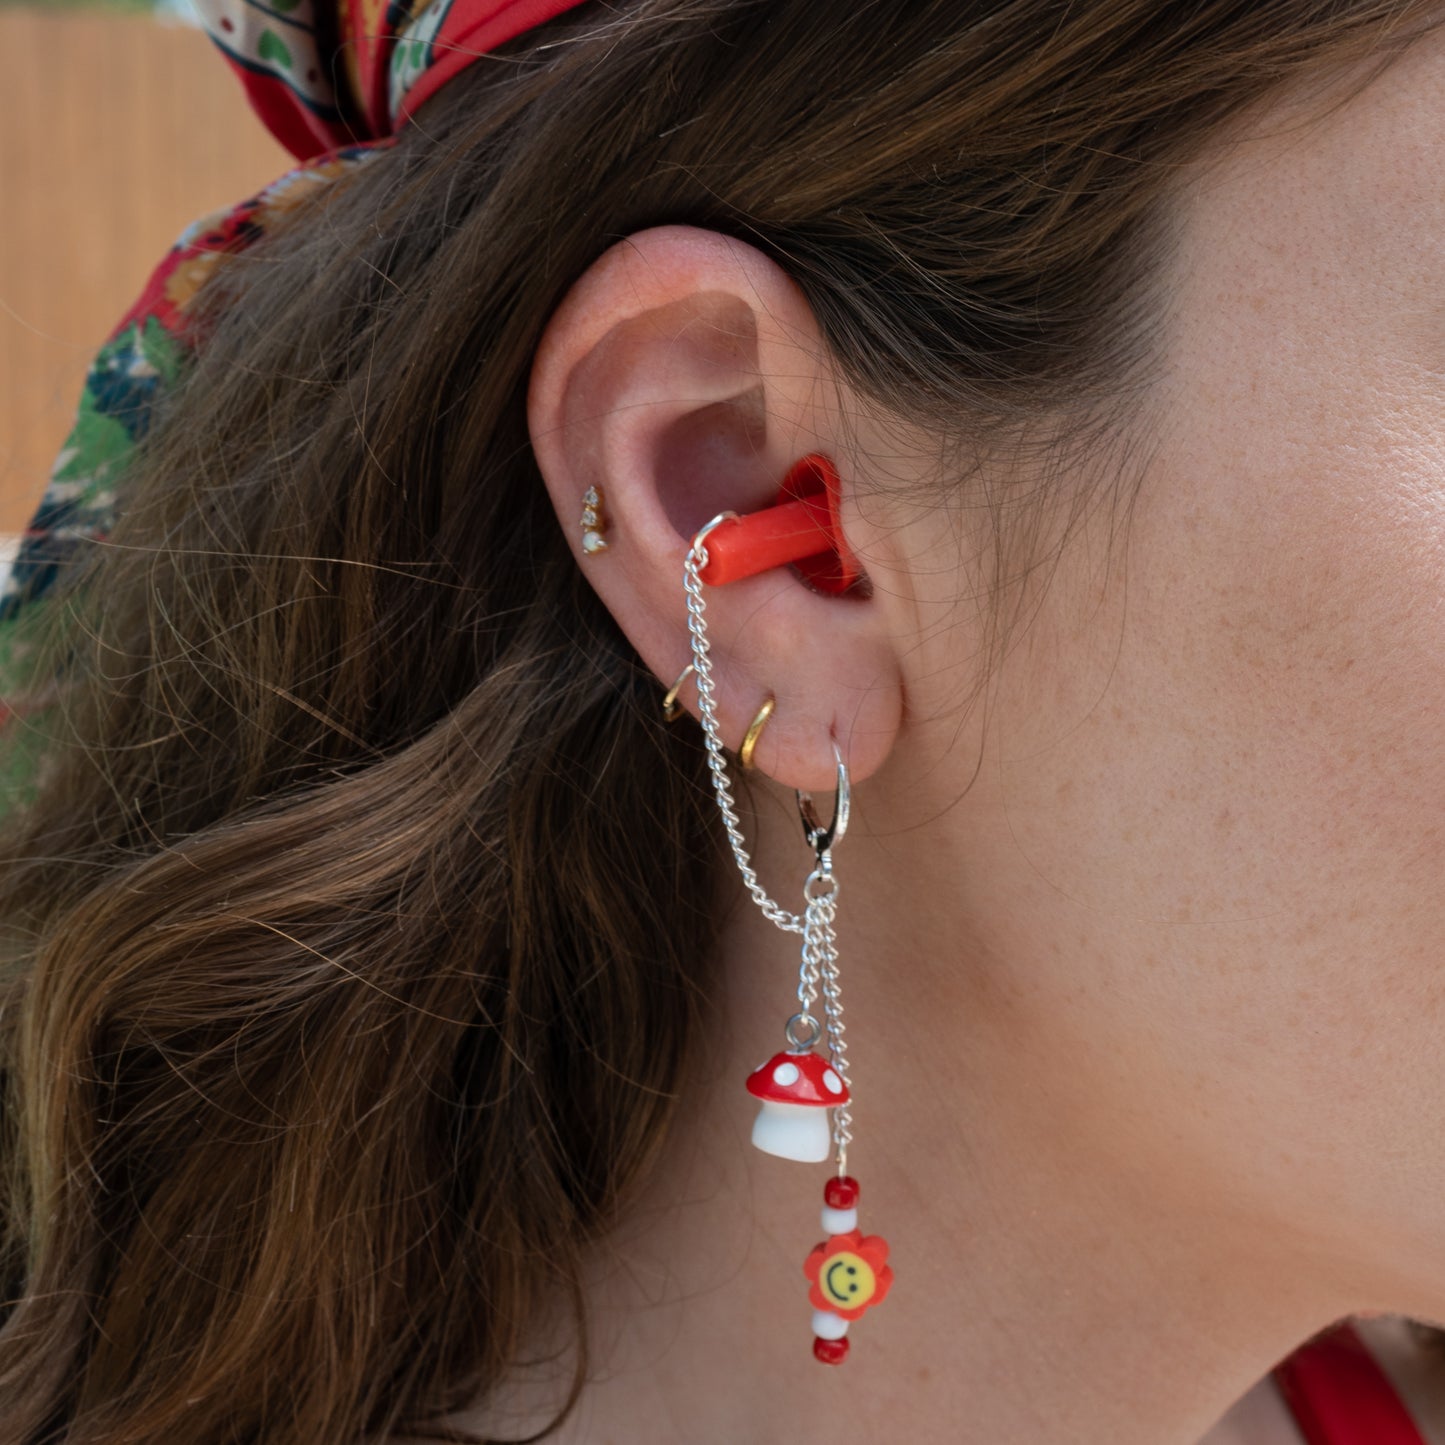 Cute Earplug earrings